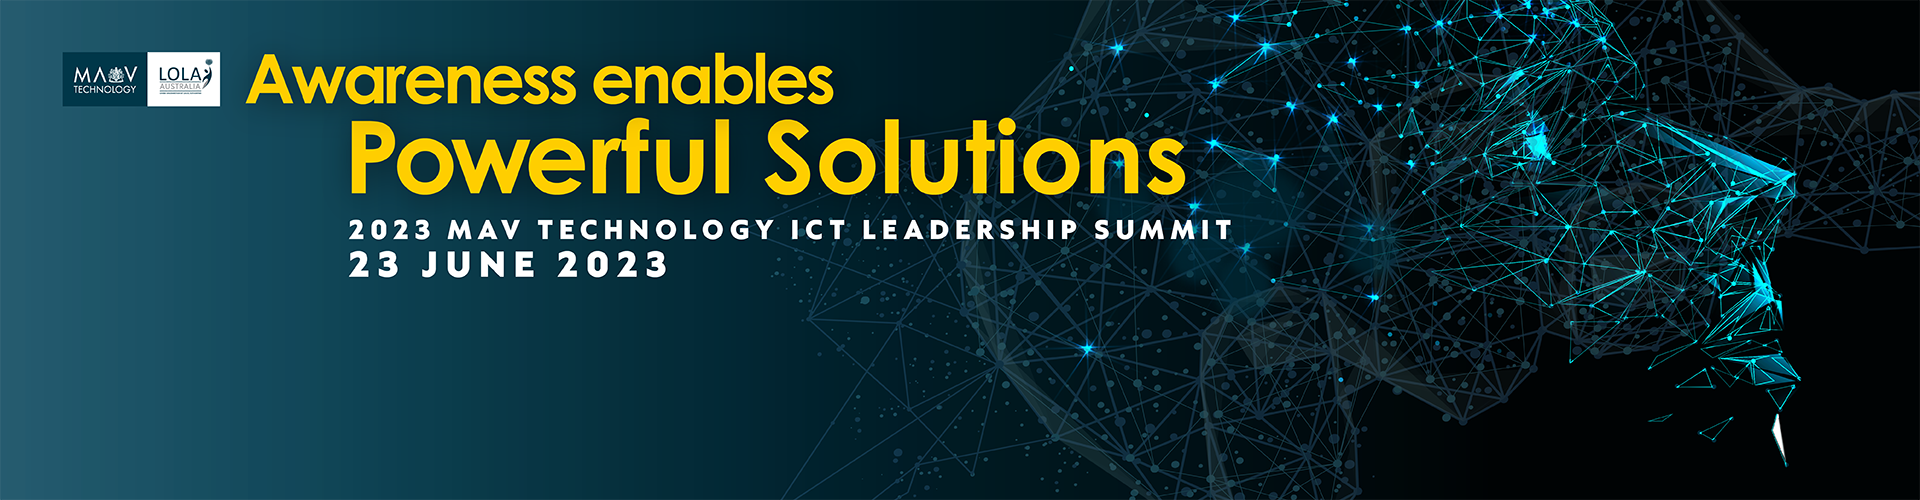 MAV Technology ICT Leadership Summit Image